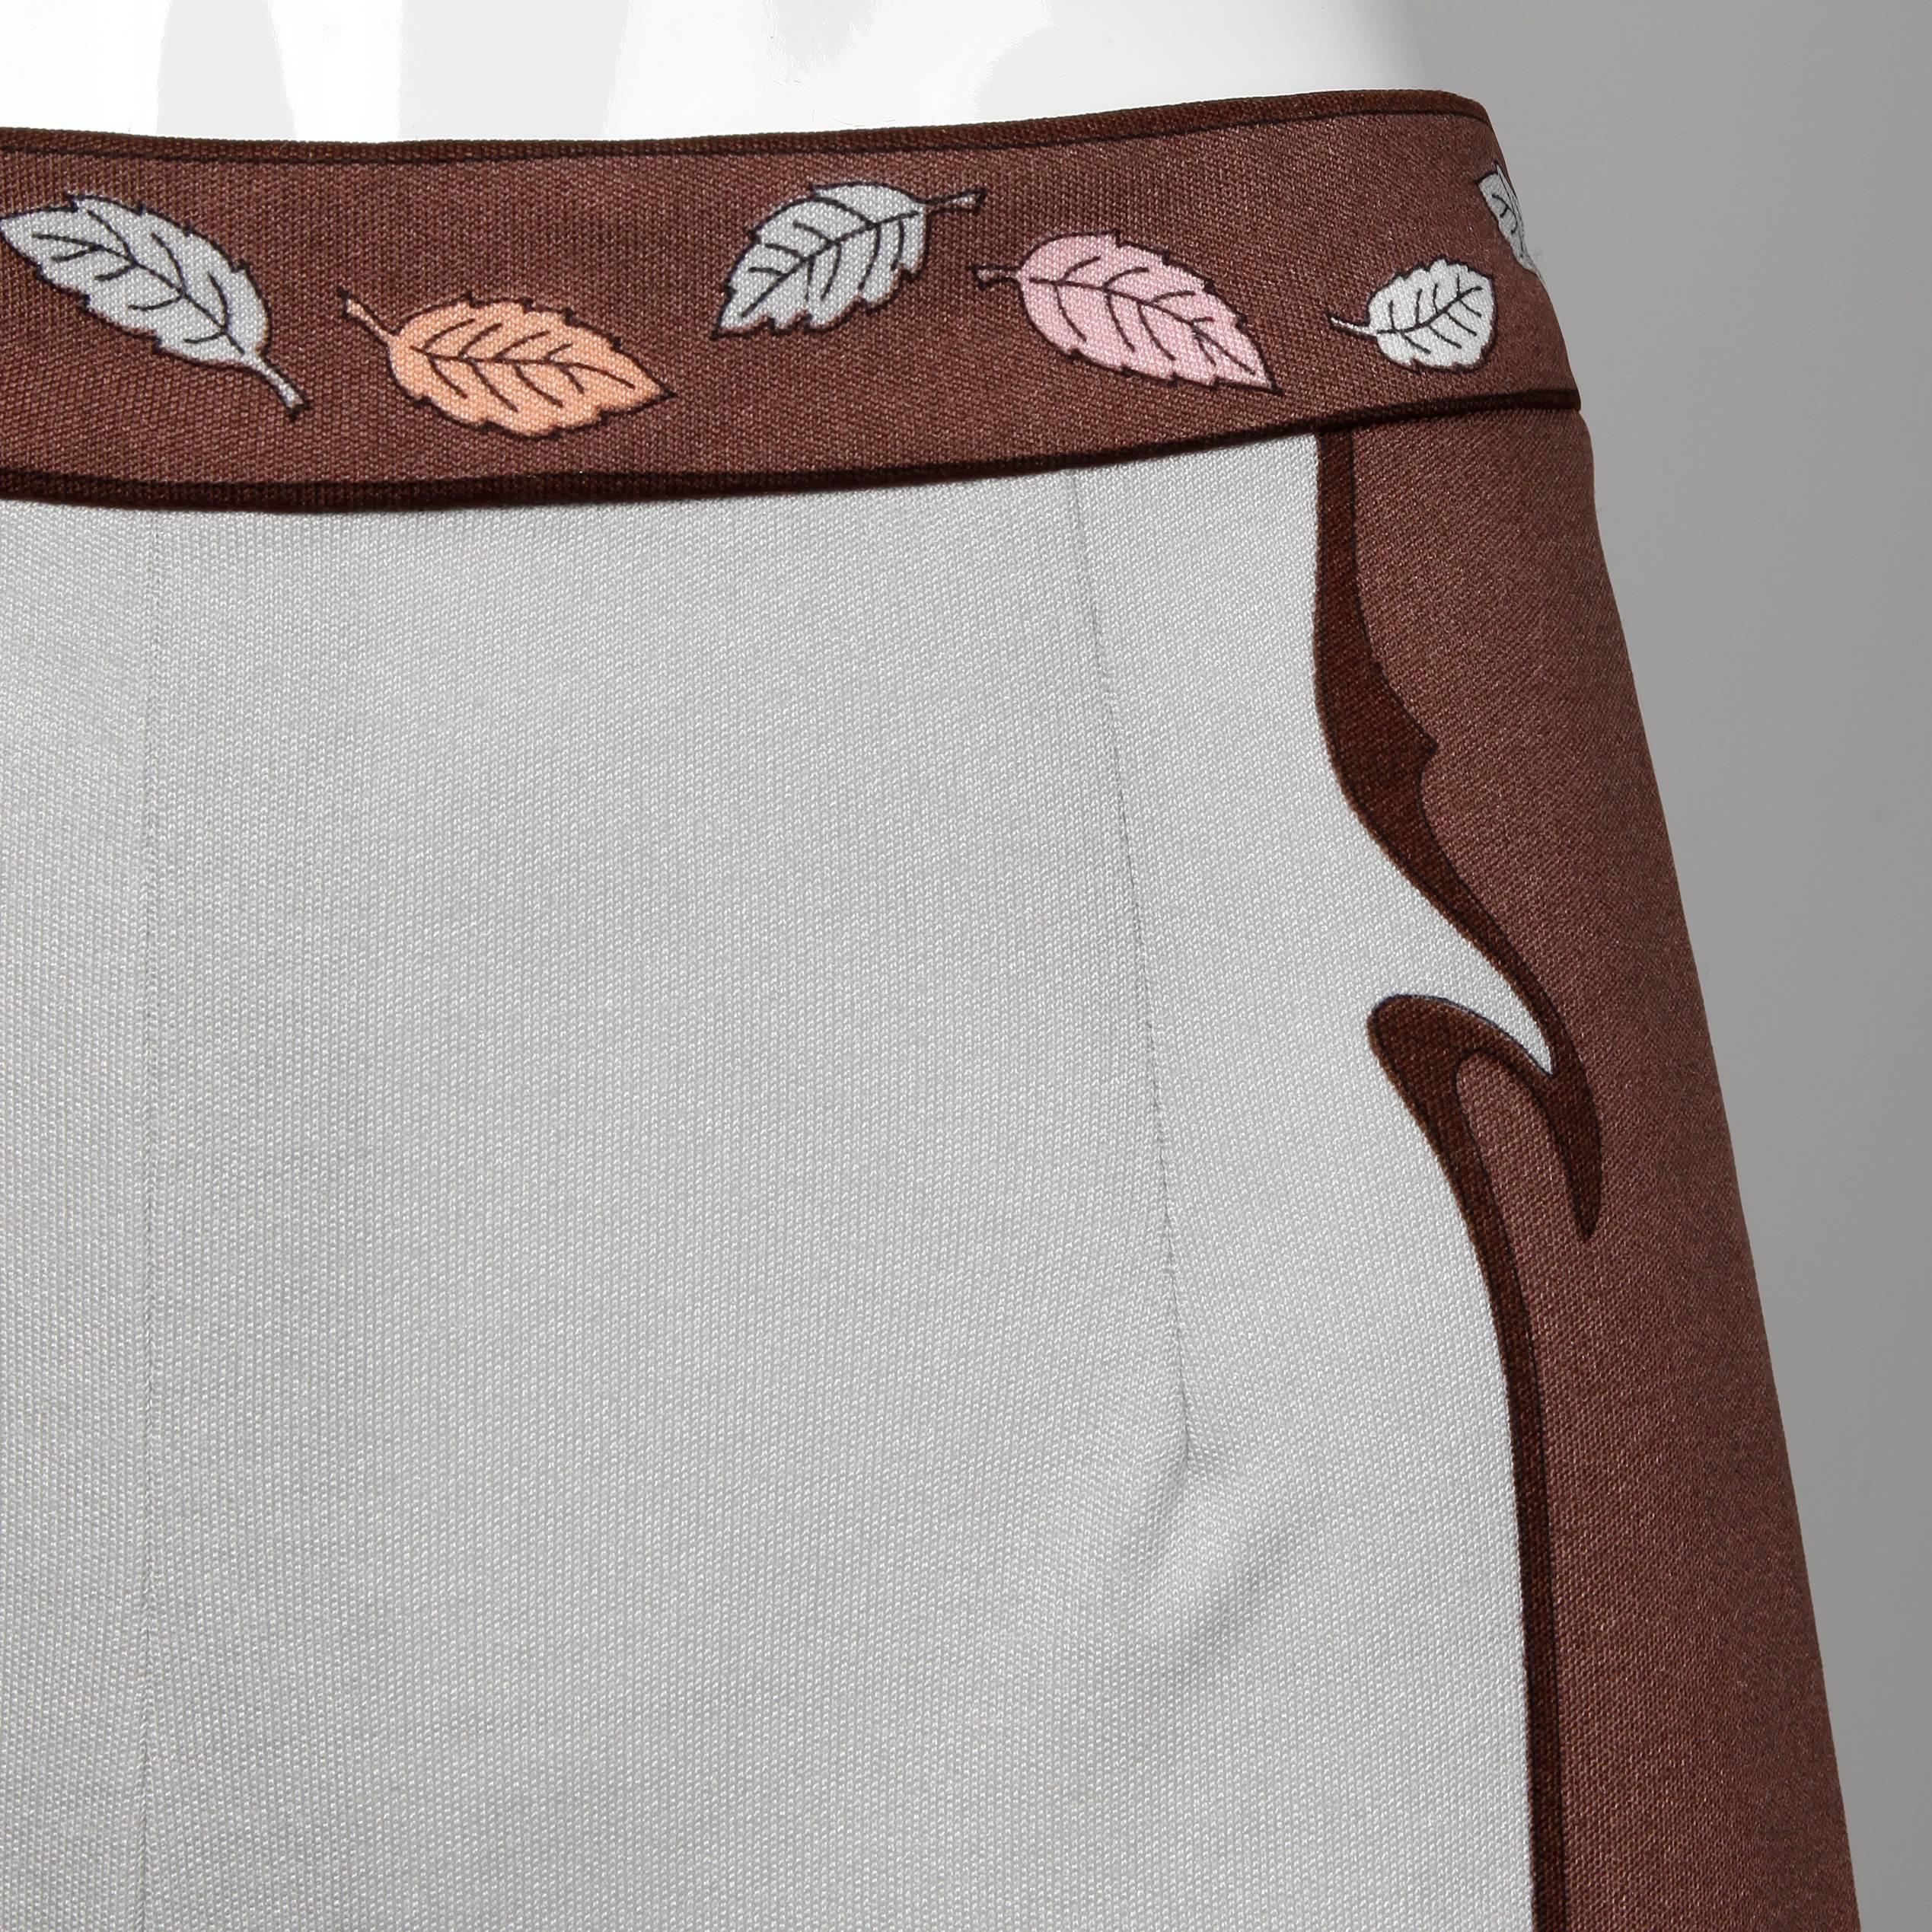 1970s Signed Paganne Print Vintage Jersey Knit Pants + Shirt or Top Jumpsuit 4